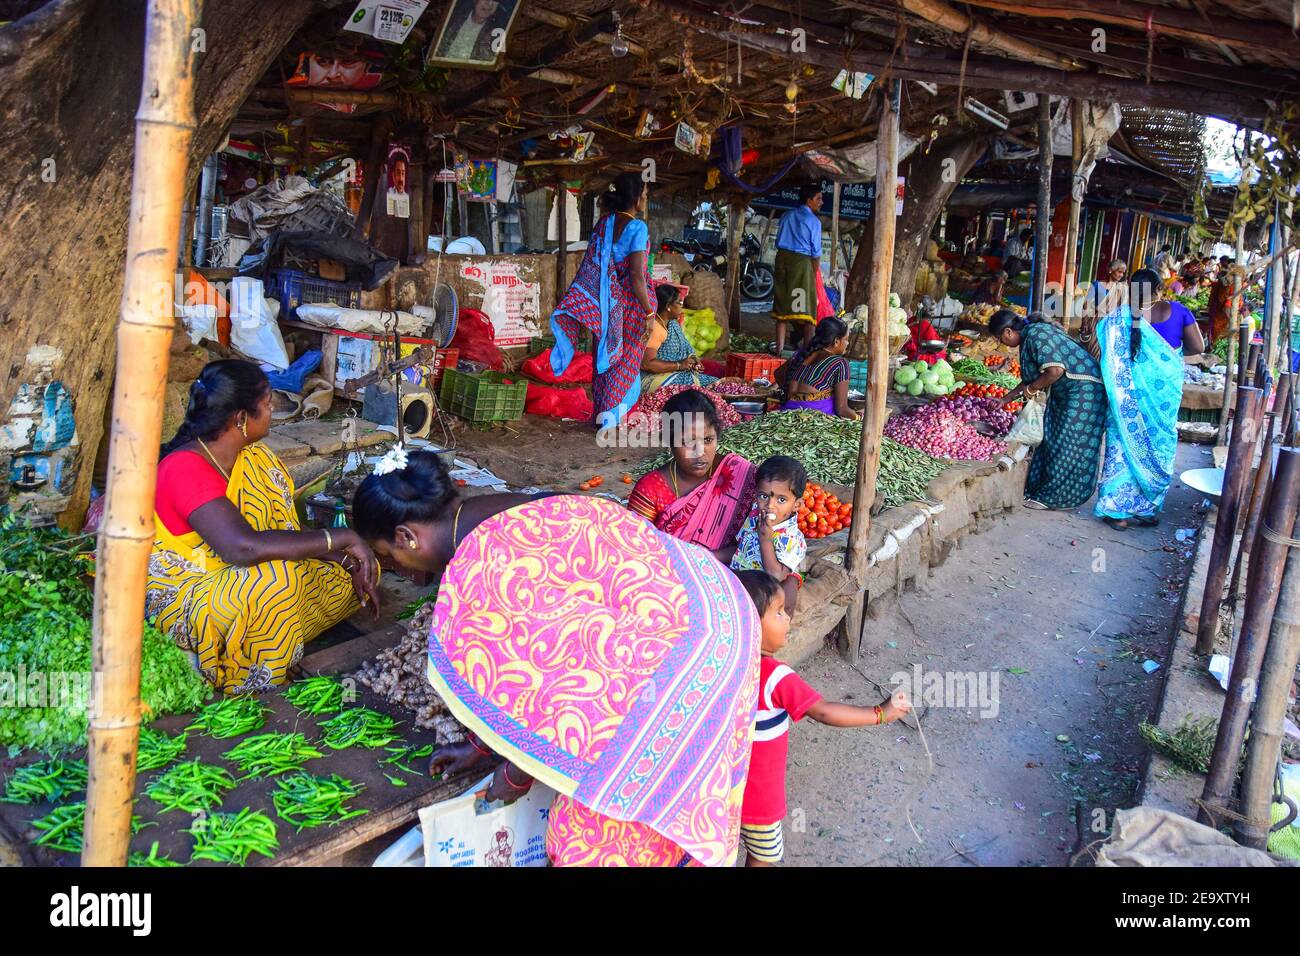 Indian Food Market, Madurai, India Stock Photo